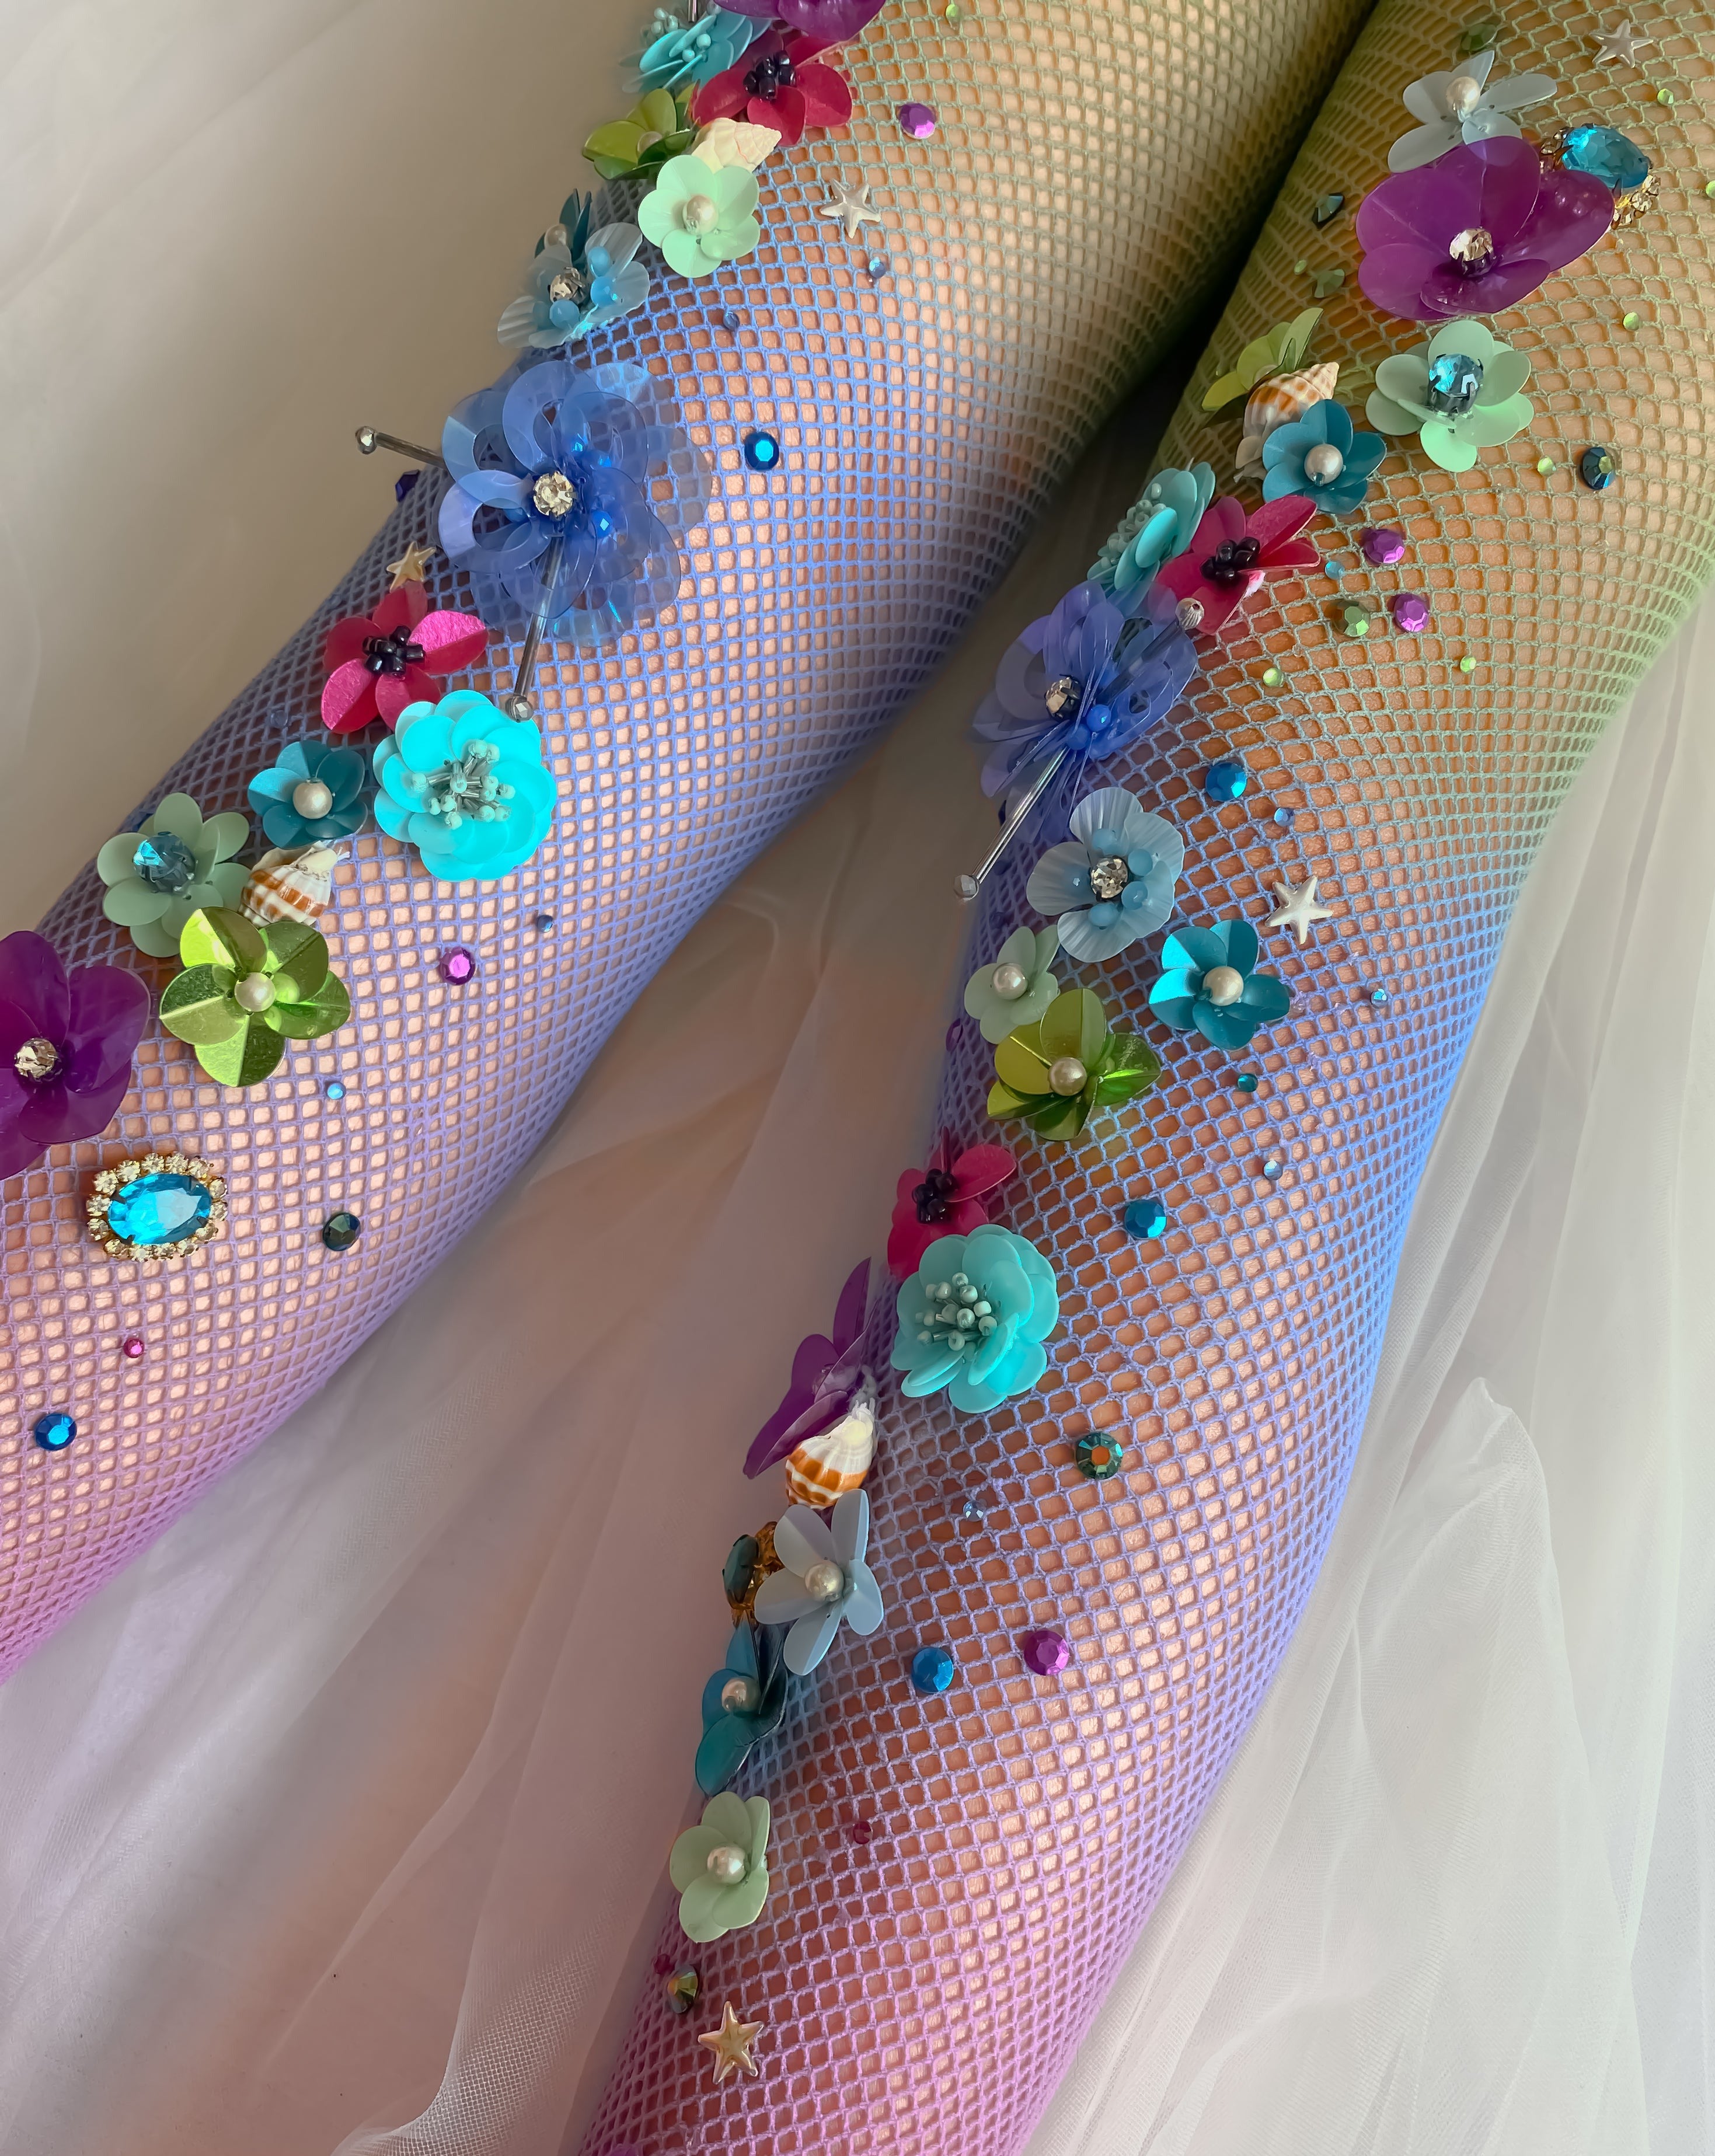 The Mermaid Fishnet Stockings